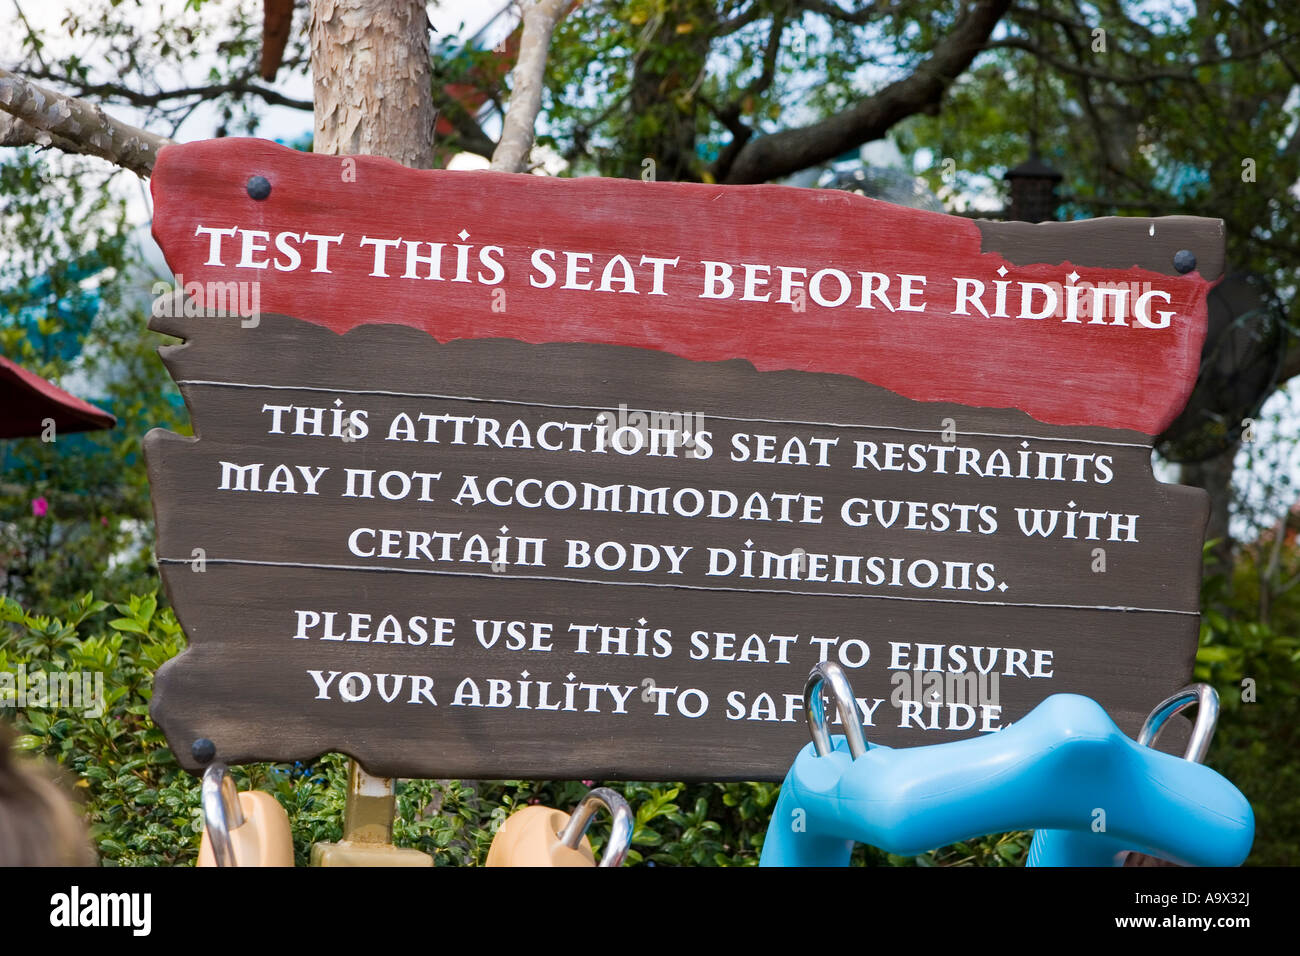 Warning sign, Islands of Adventure, Orlando Florida Stock Photo